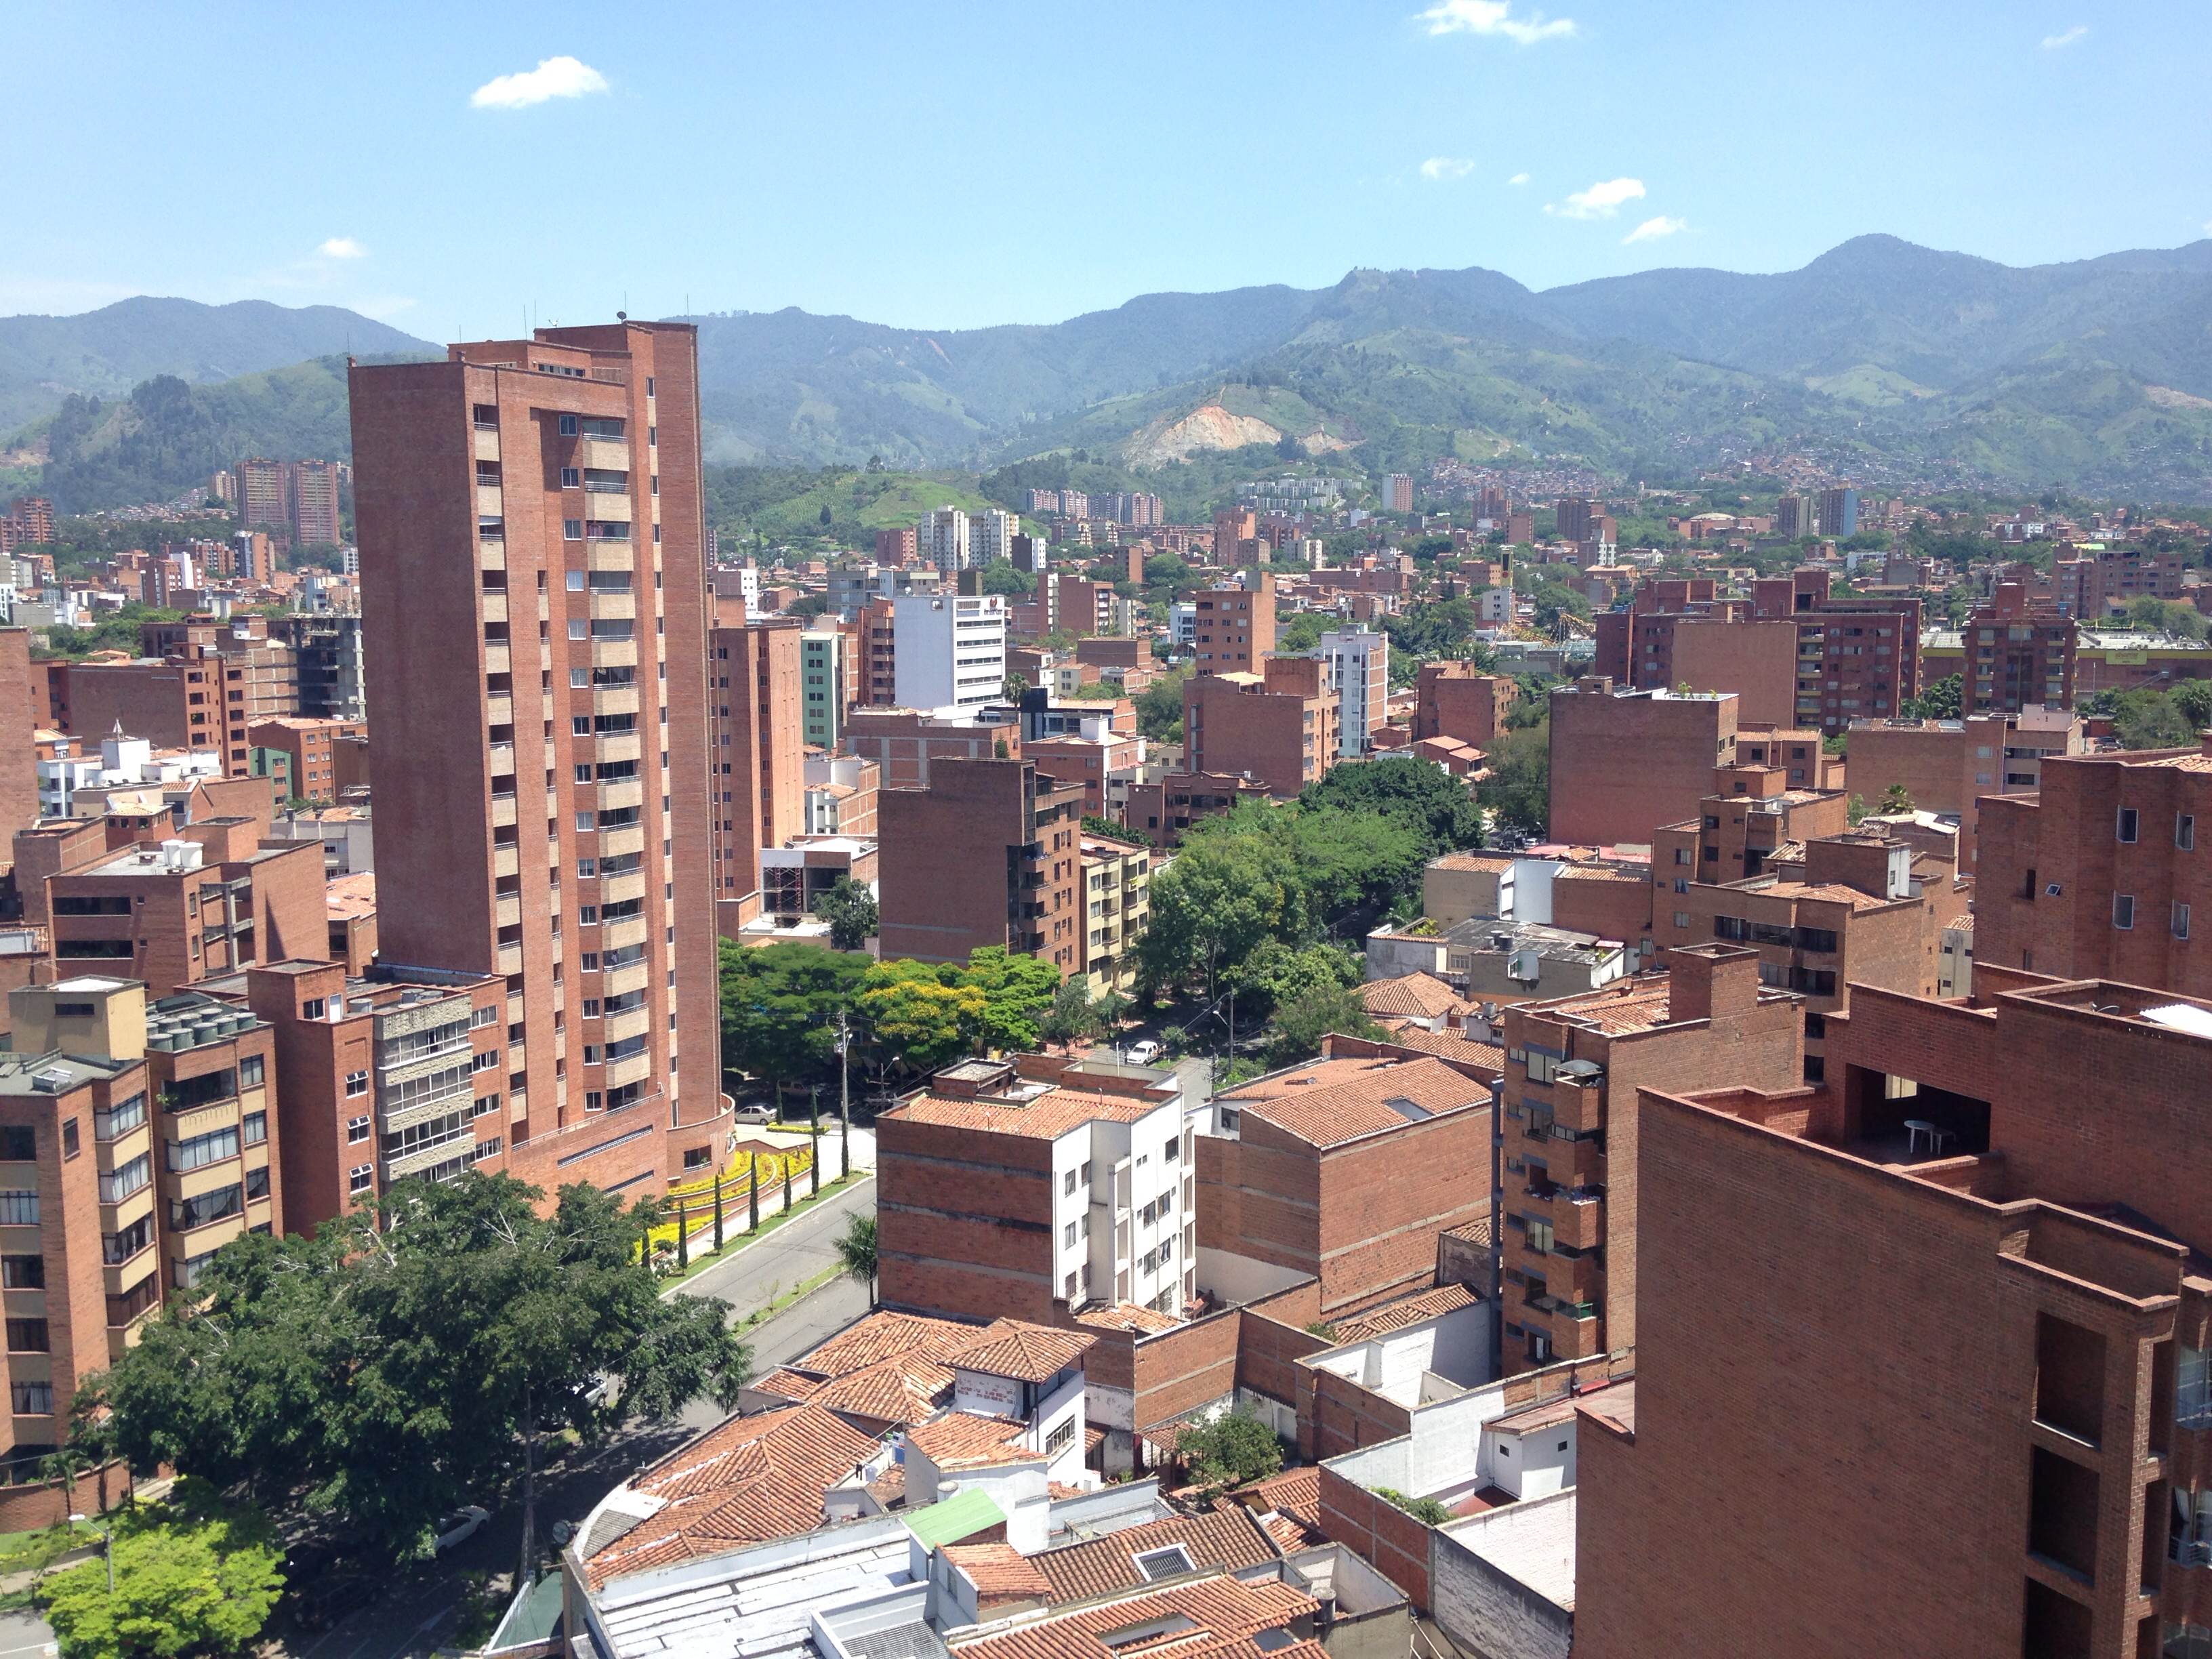 cityscape of Laureles, Medellin